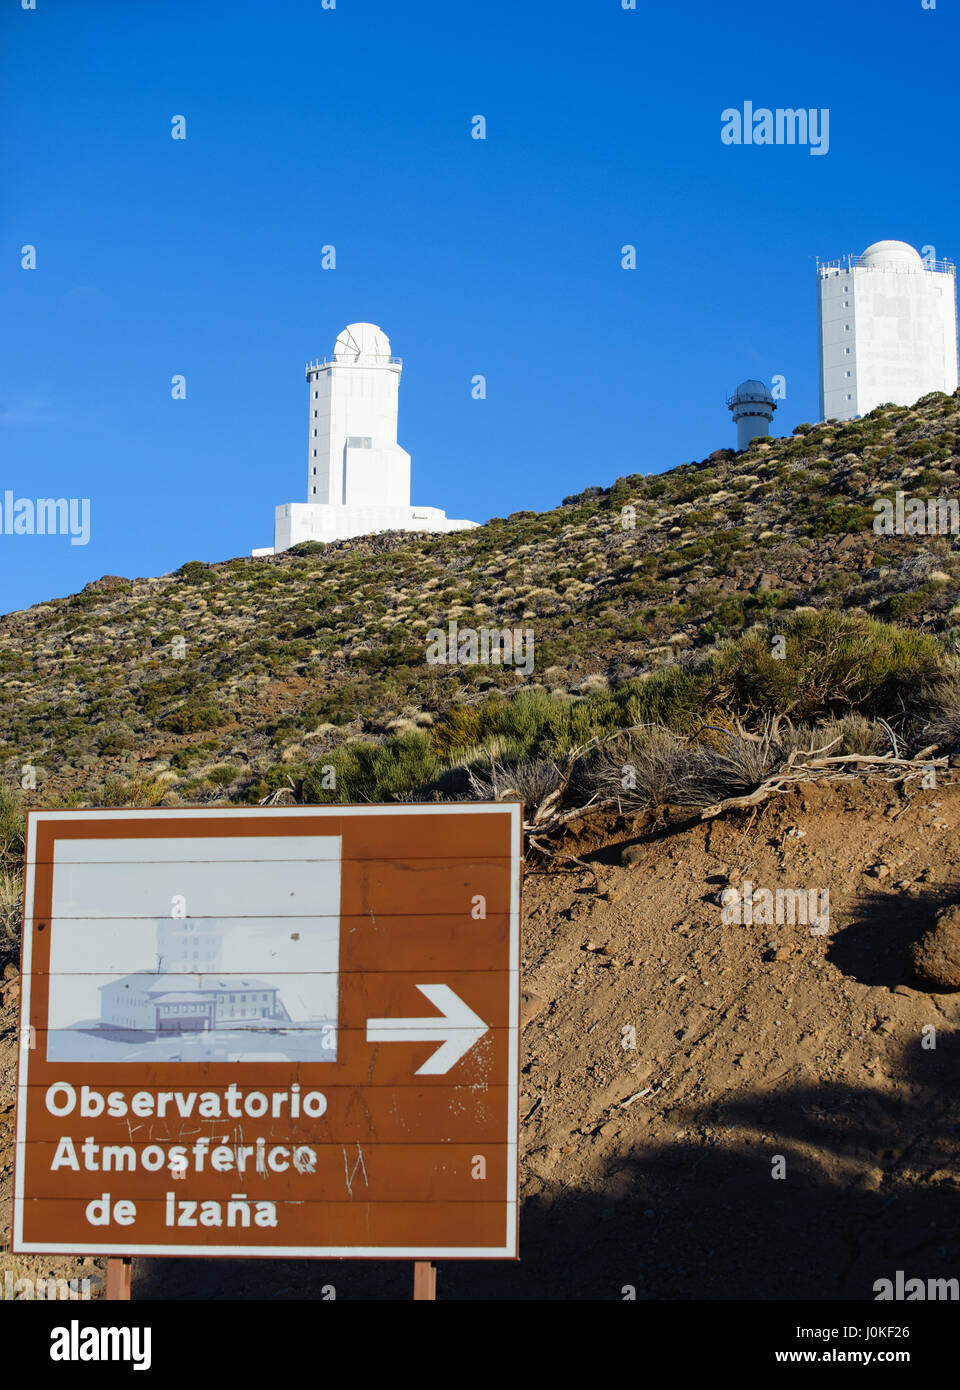 Observatorio atmosferica de Izana ,Tenerife,  Canary Islands, Spain Stock Photo